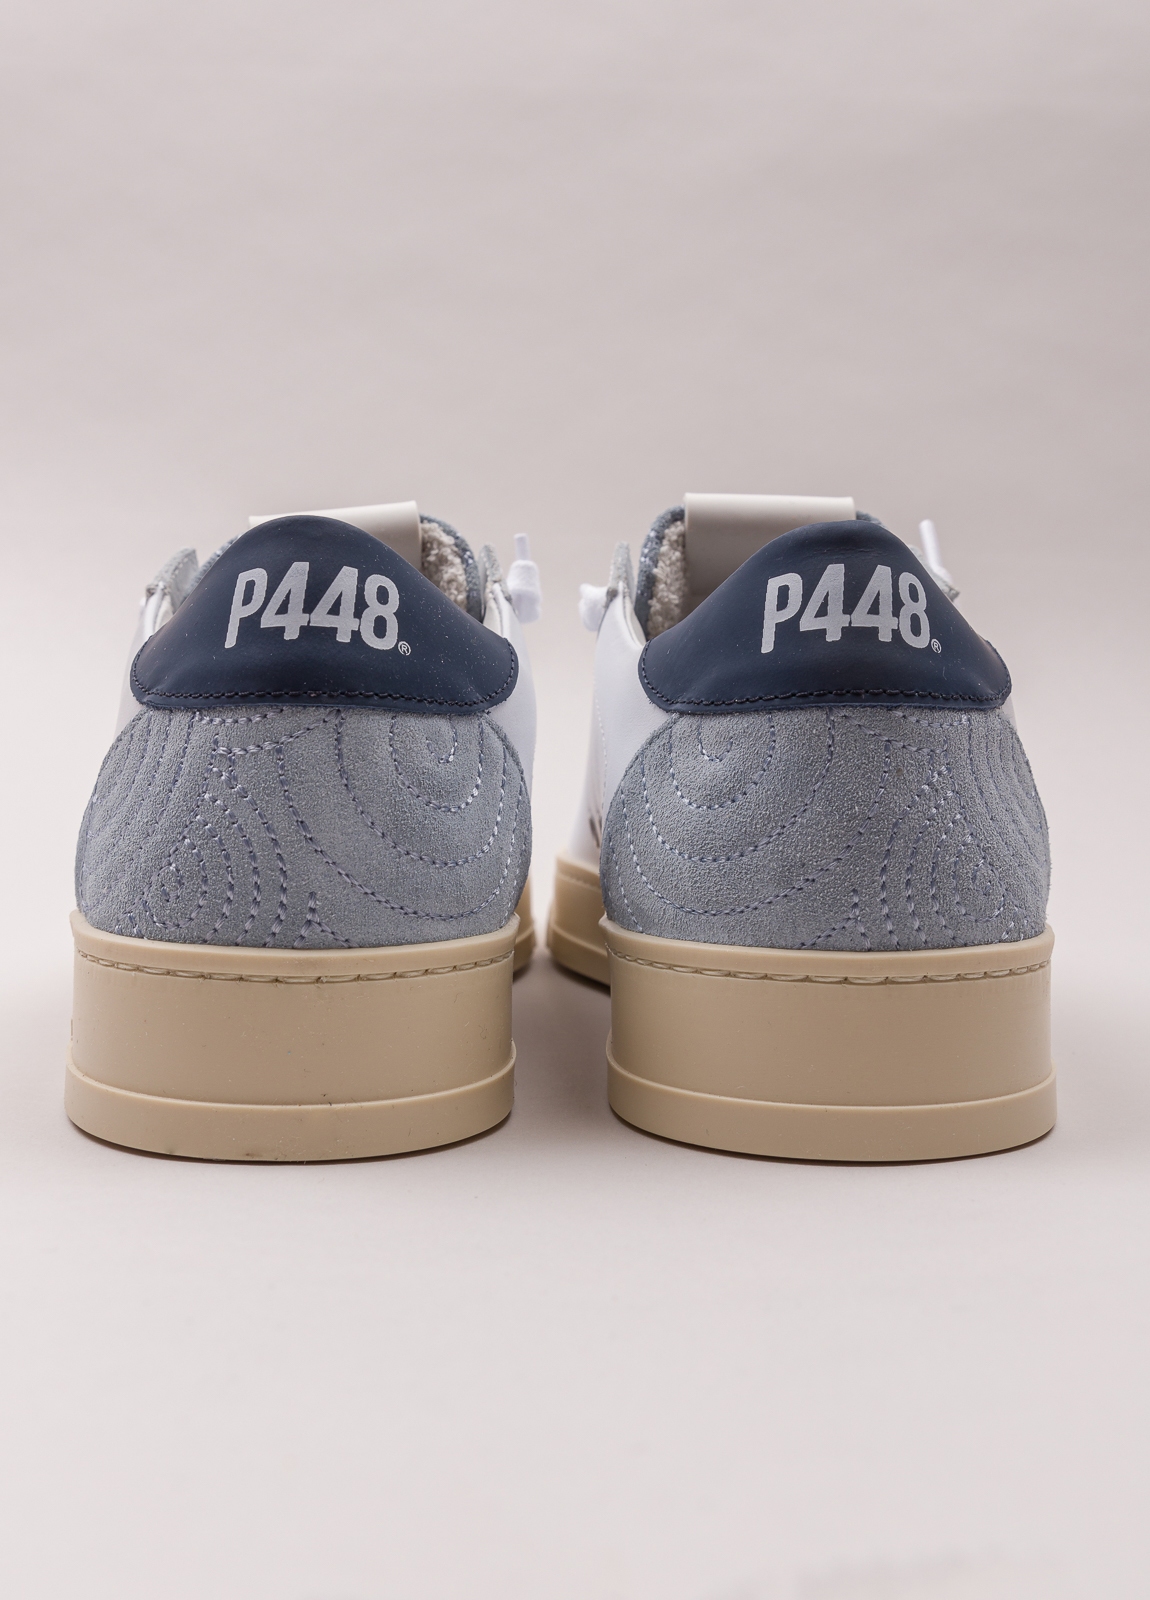 Sneaker P448 blanca y azul - Ítem3